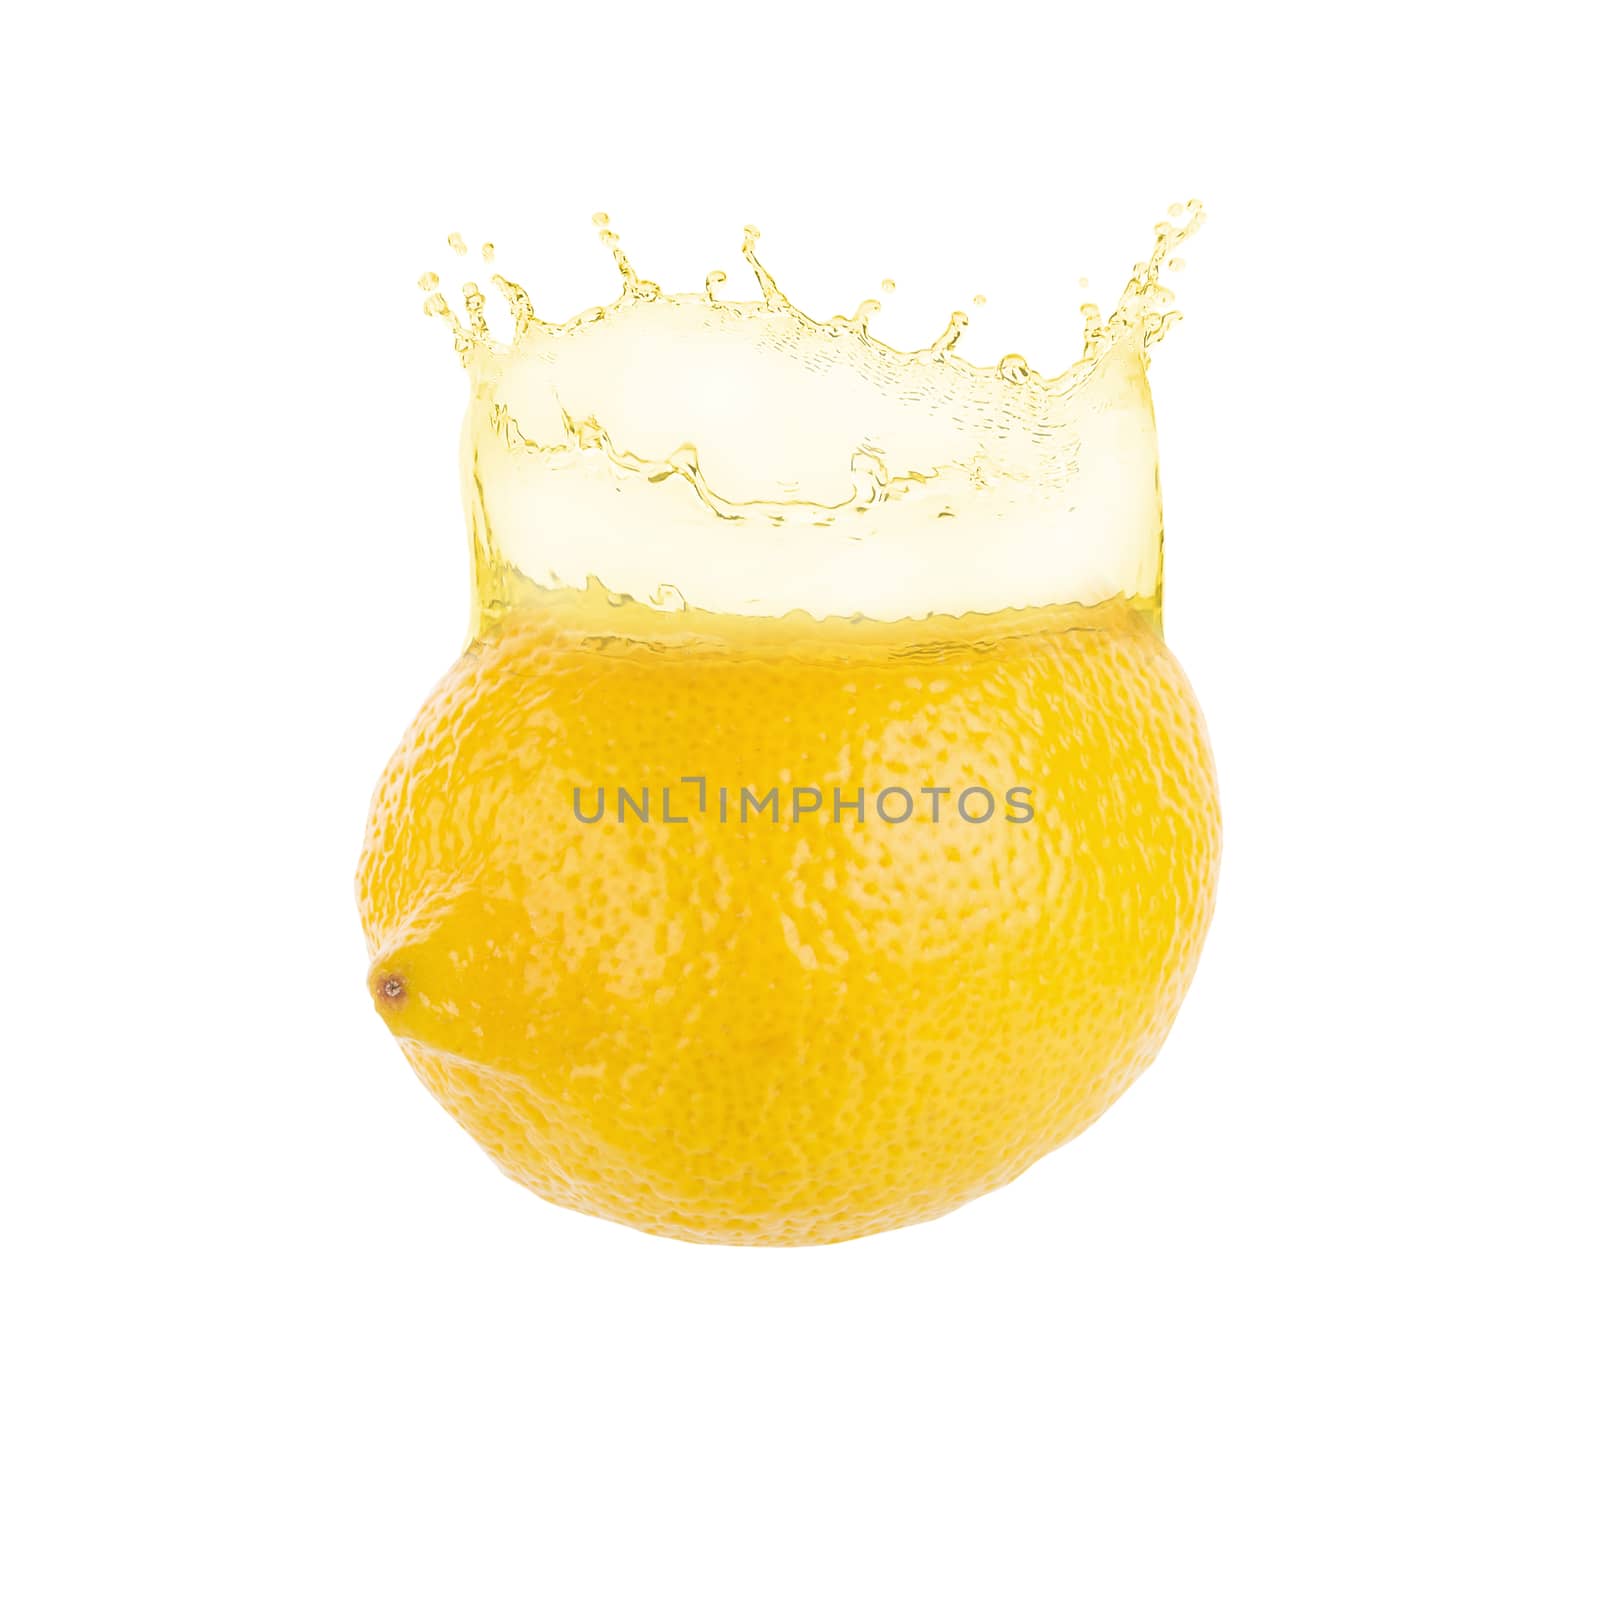 yellow lemon and lemon juice splashing isolated on a white backg by kaiskynet